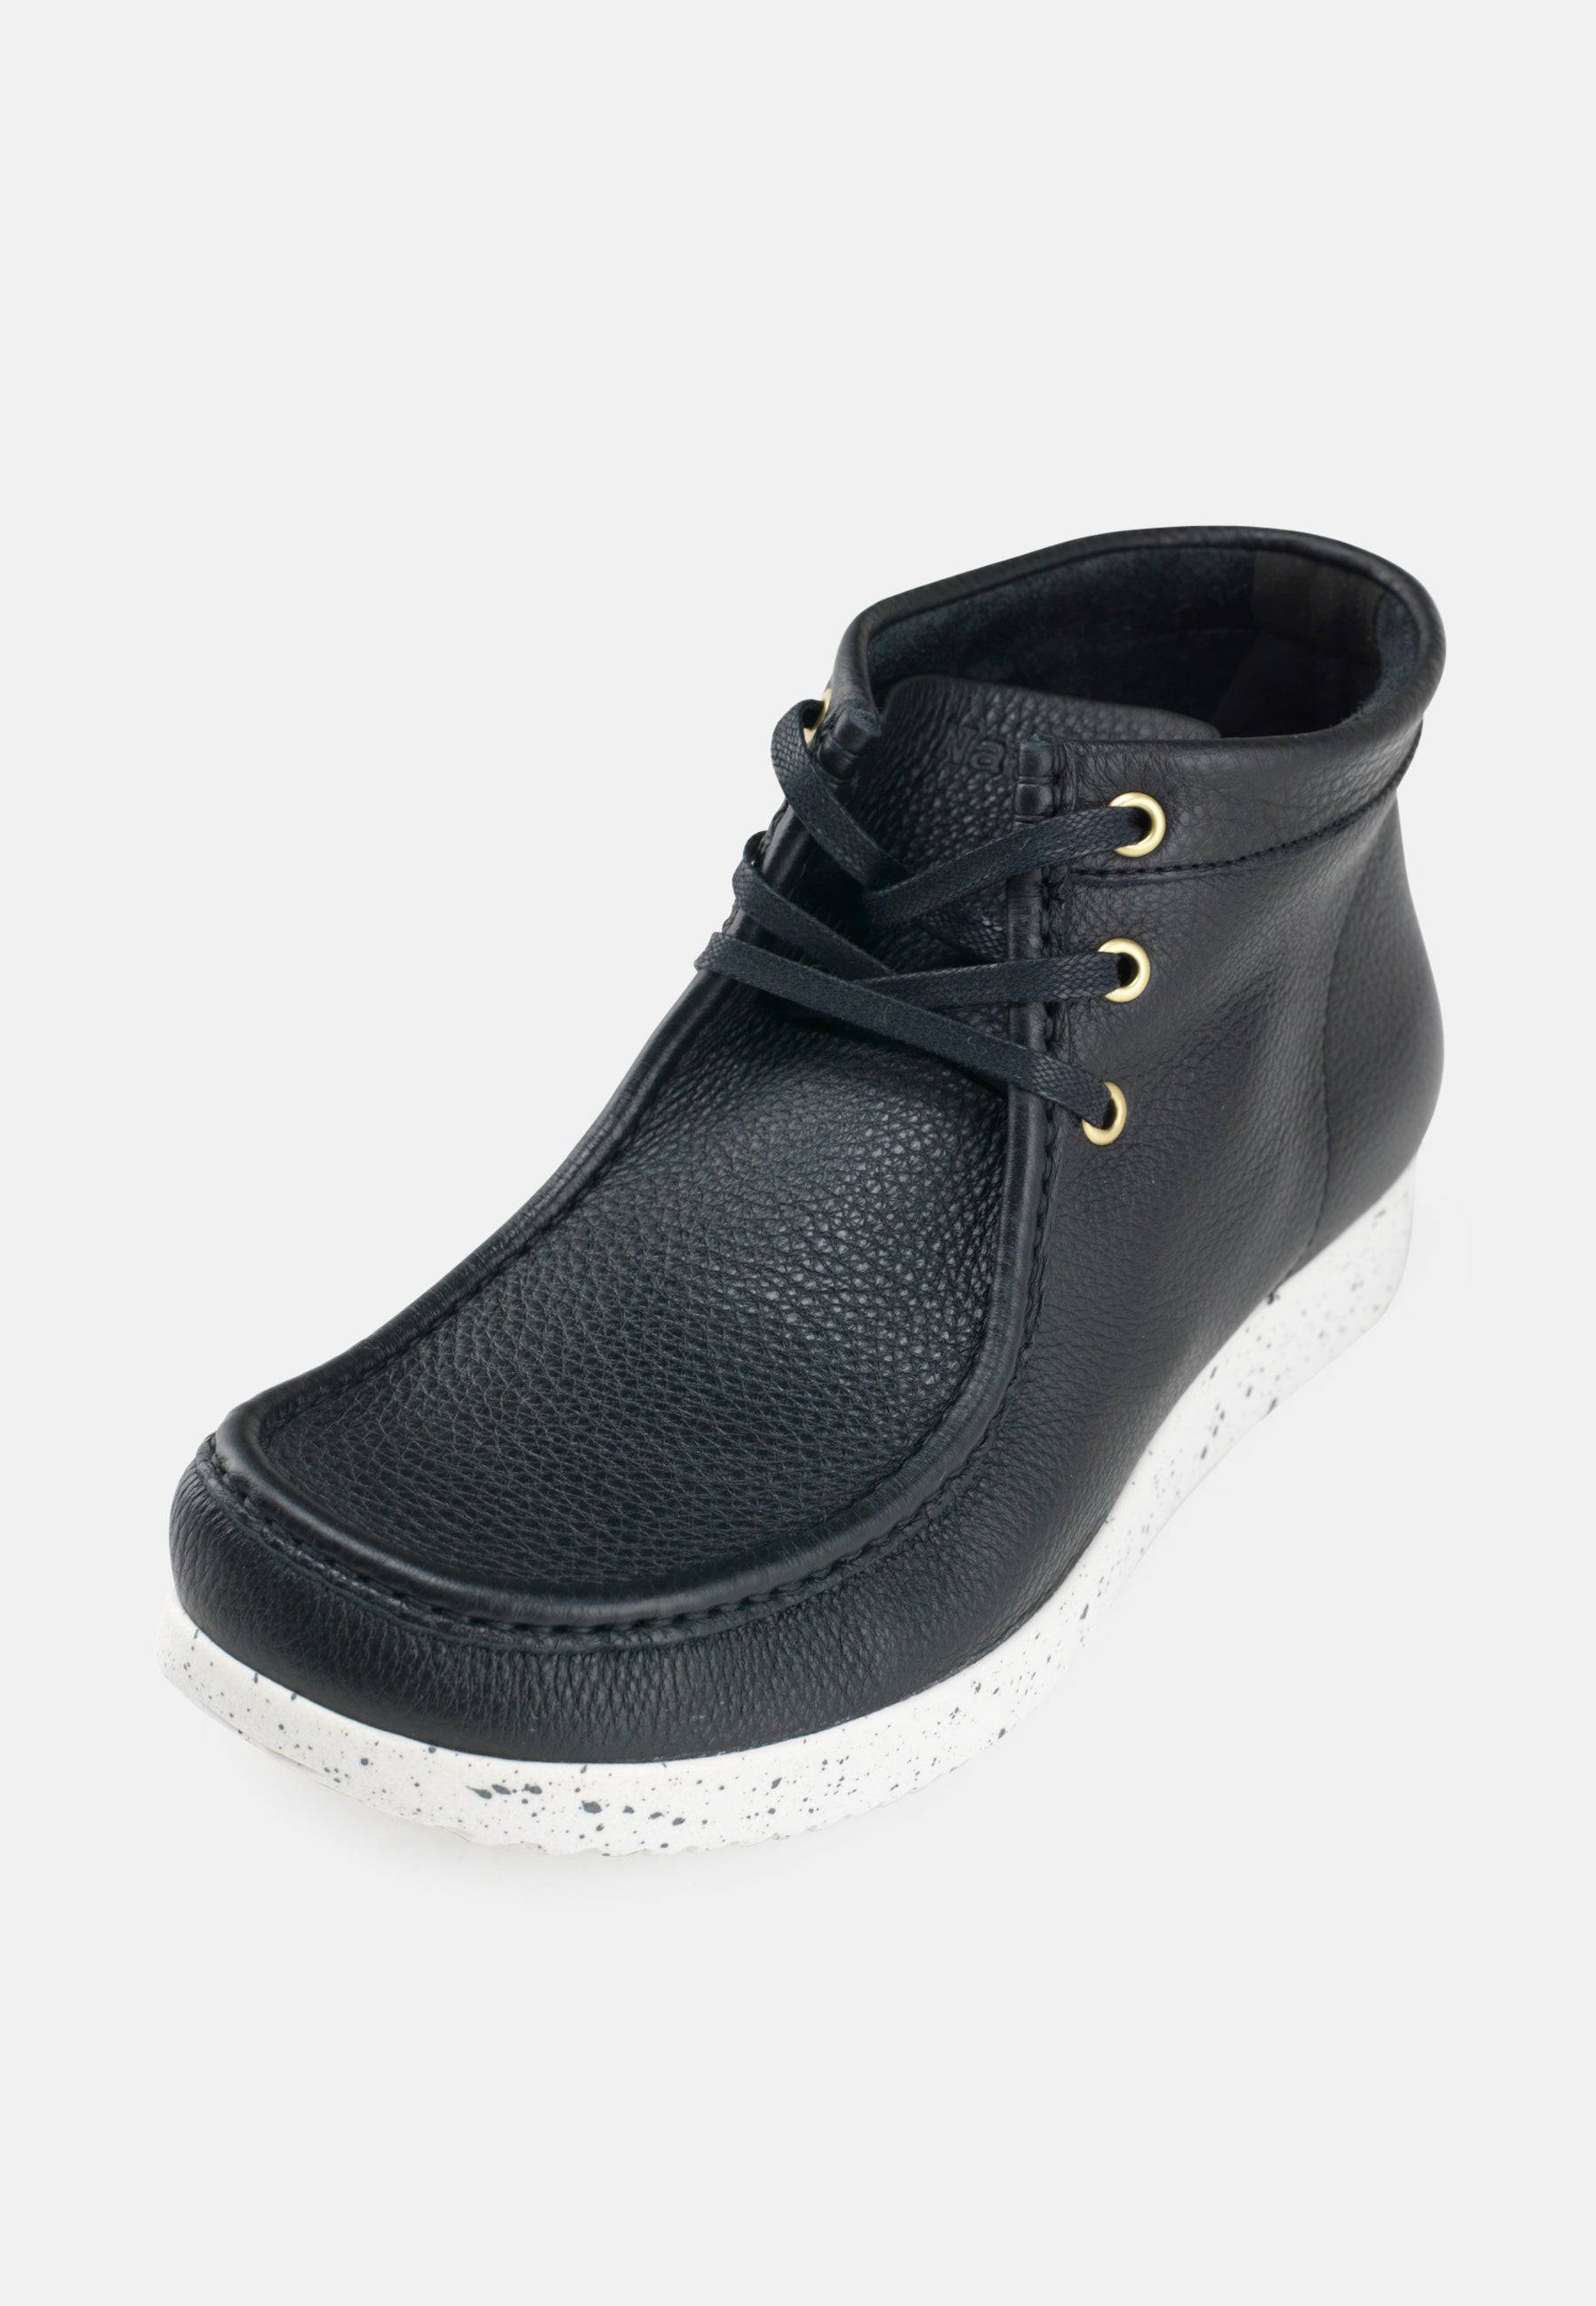 Anton Støvle Leather - Black - Nature Footwear